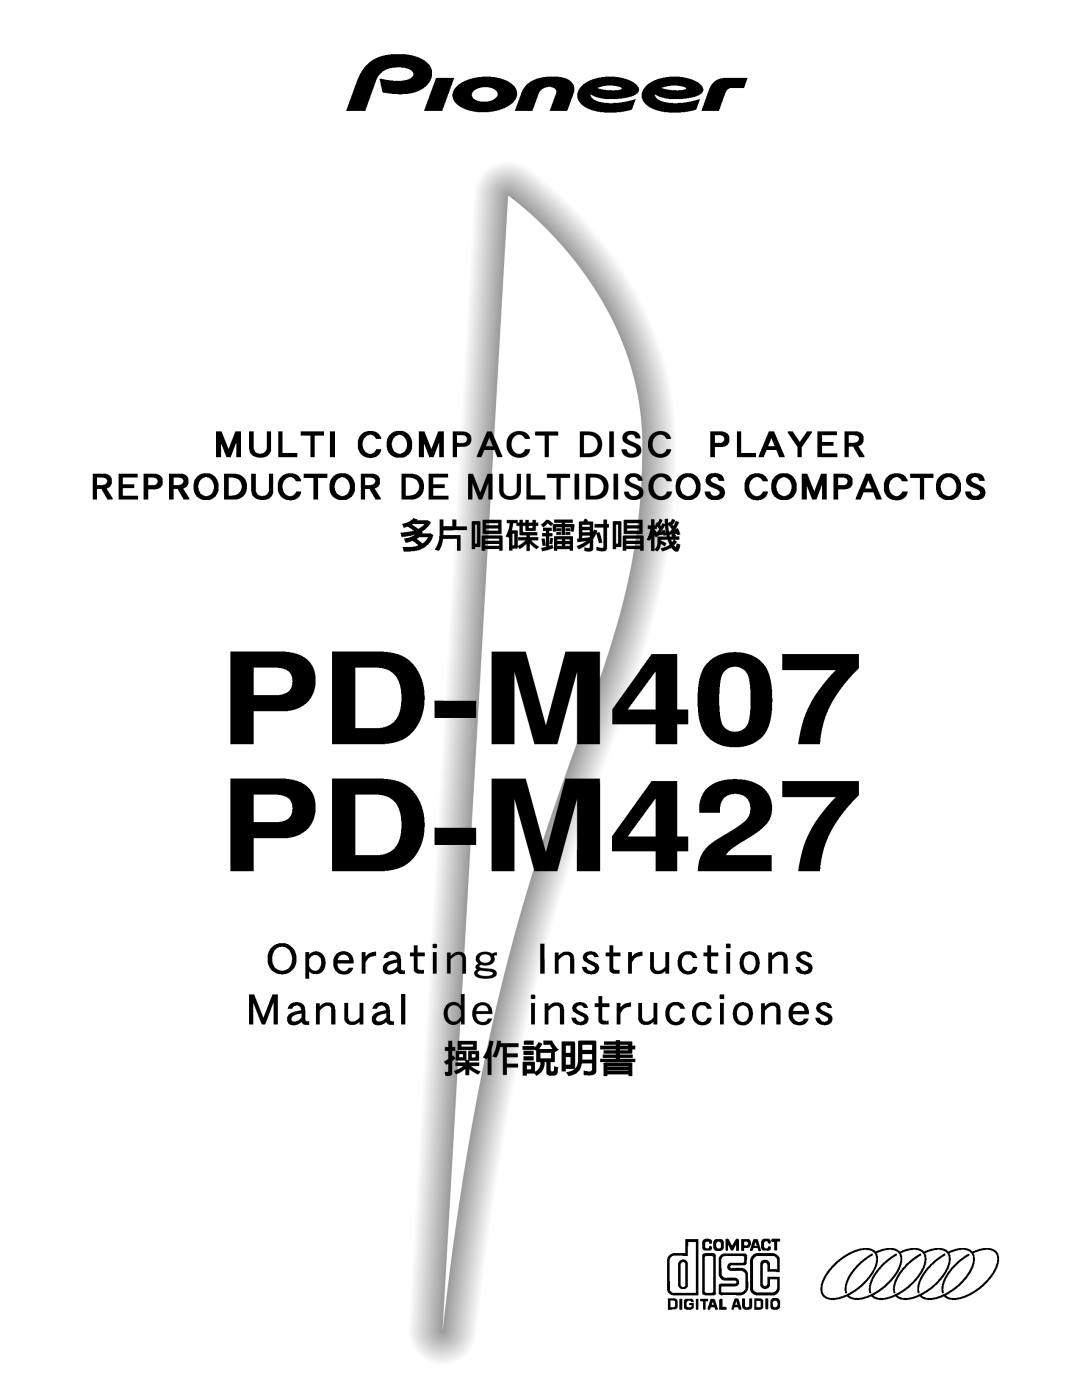 Pioneer manual 多片唱碟鐳射唱機, PD-M407 PD-M427, 操作說明書, Multi Compact Disc Player, Reproductor De Multidiscos Compactos 